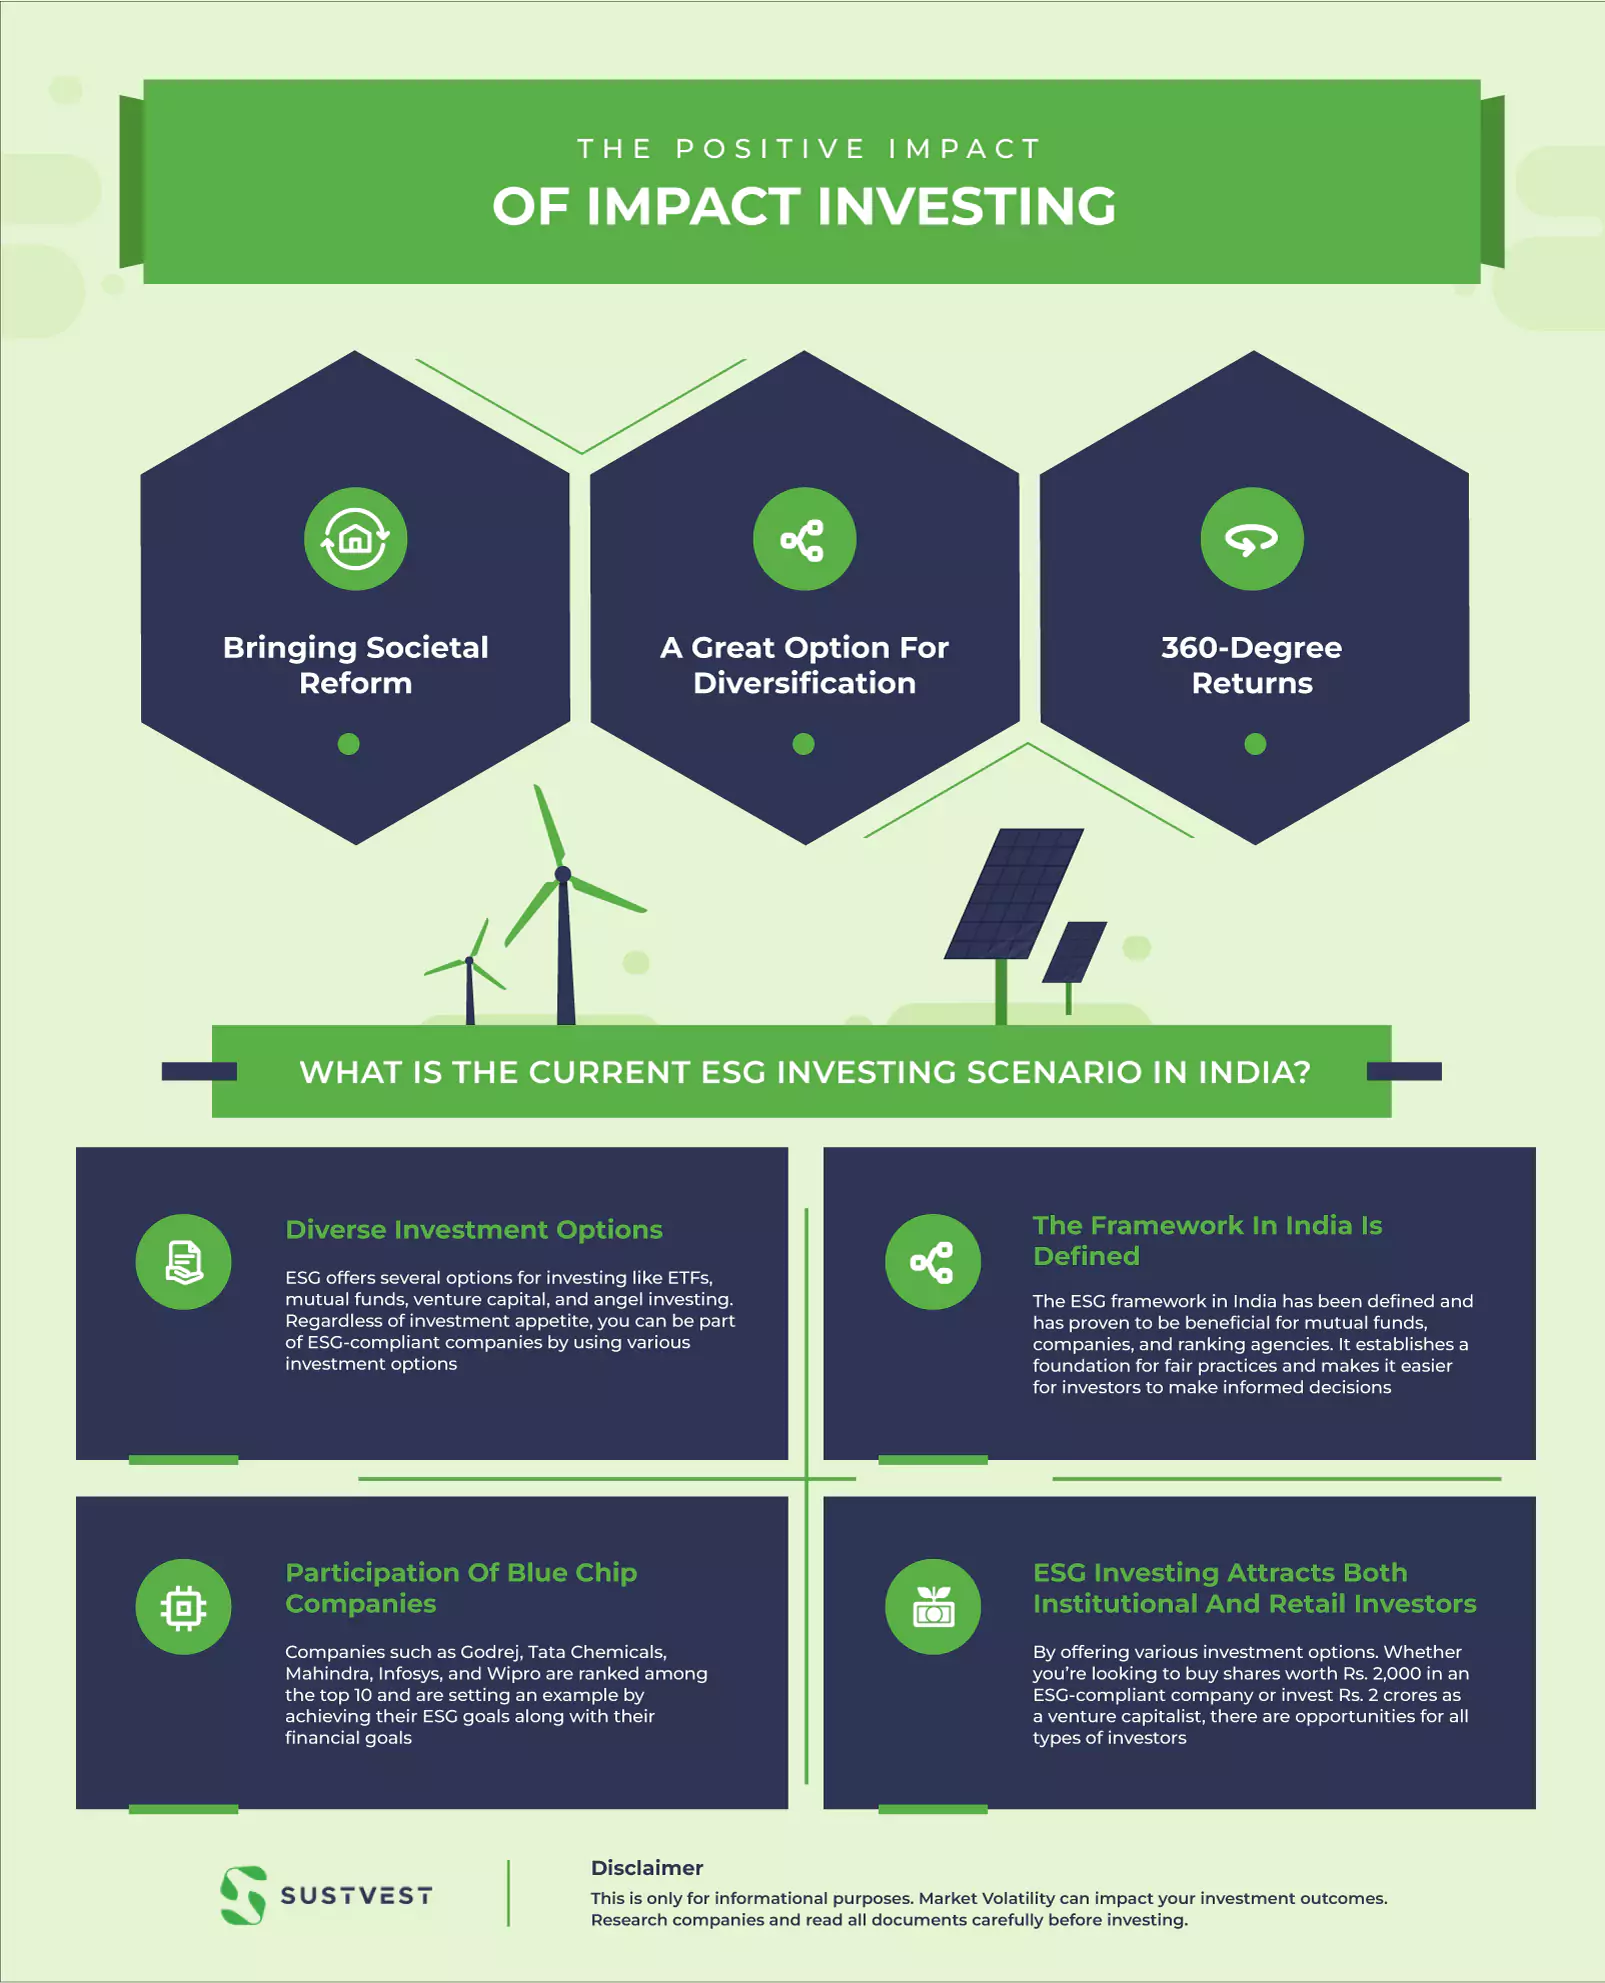 Impact investment ESG investment SRI Investment